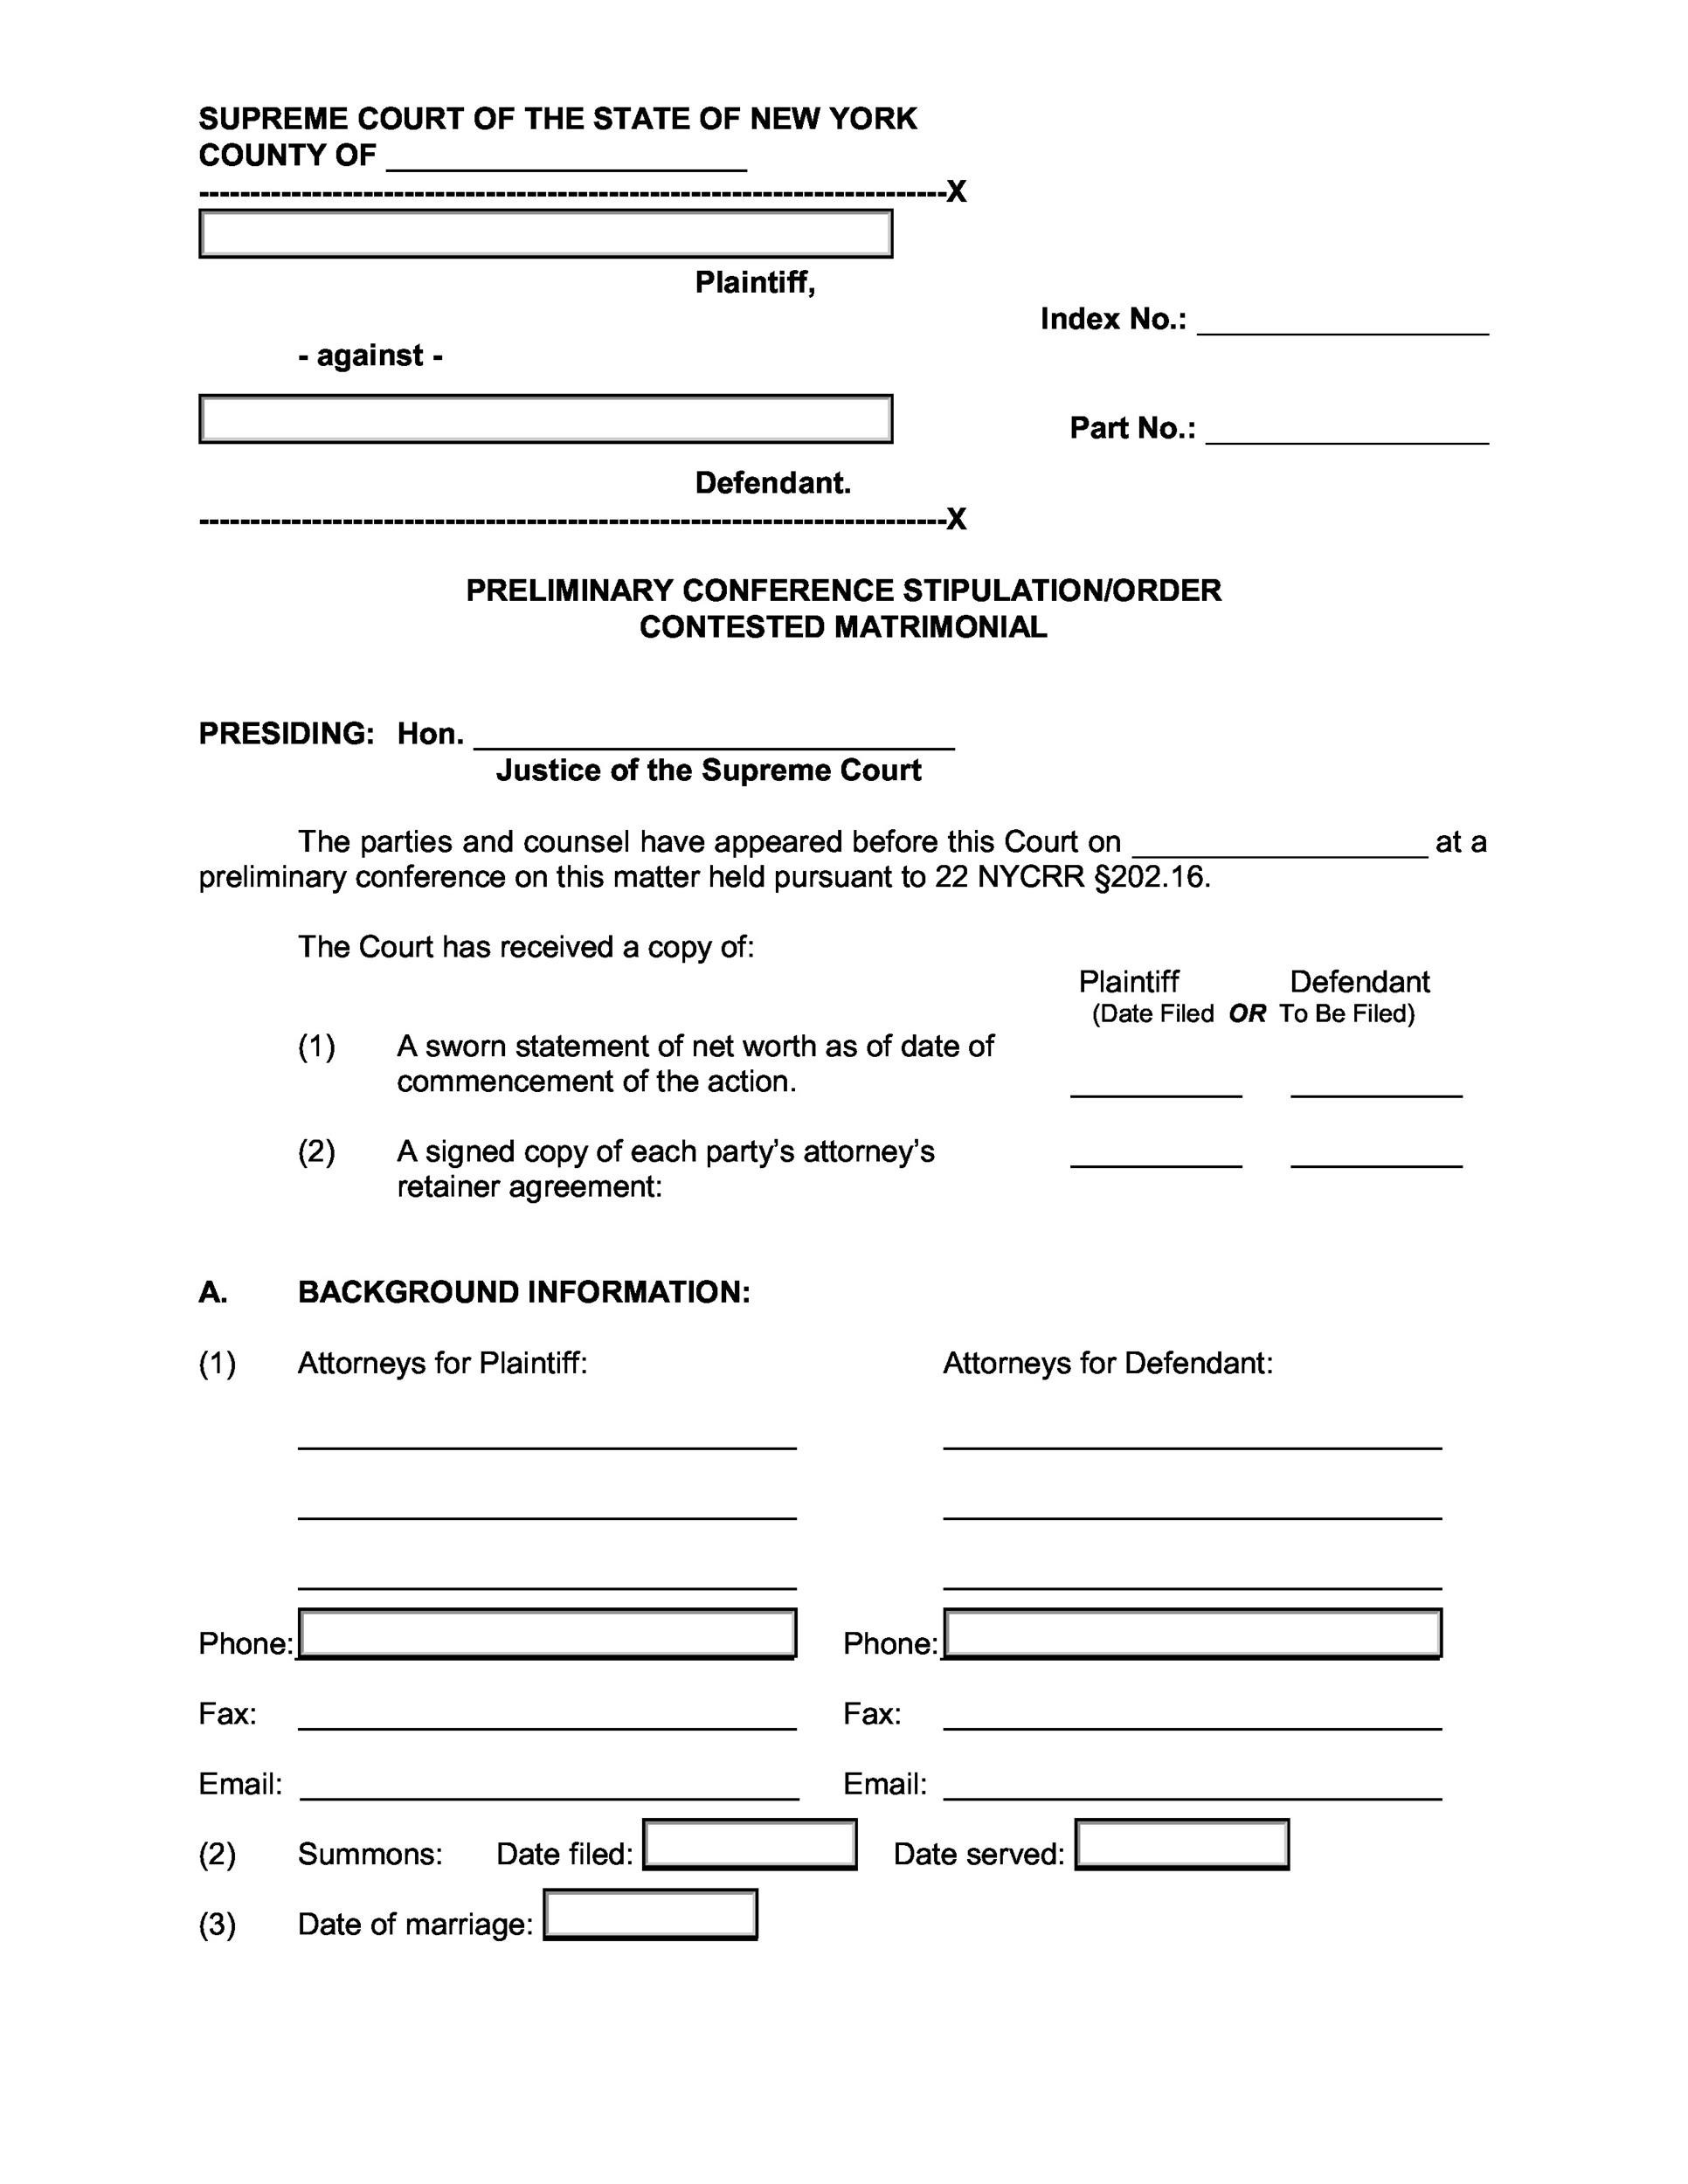 30+ Prenuptial Agreement Samples & Forms ᐅ TemplateLab